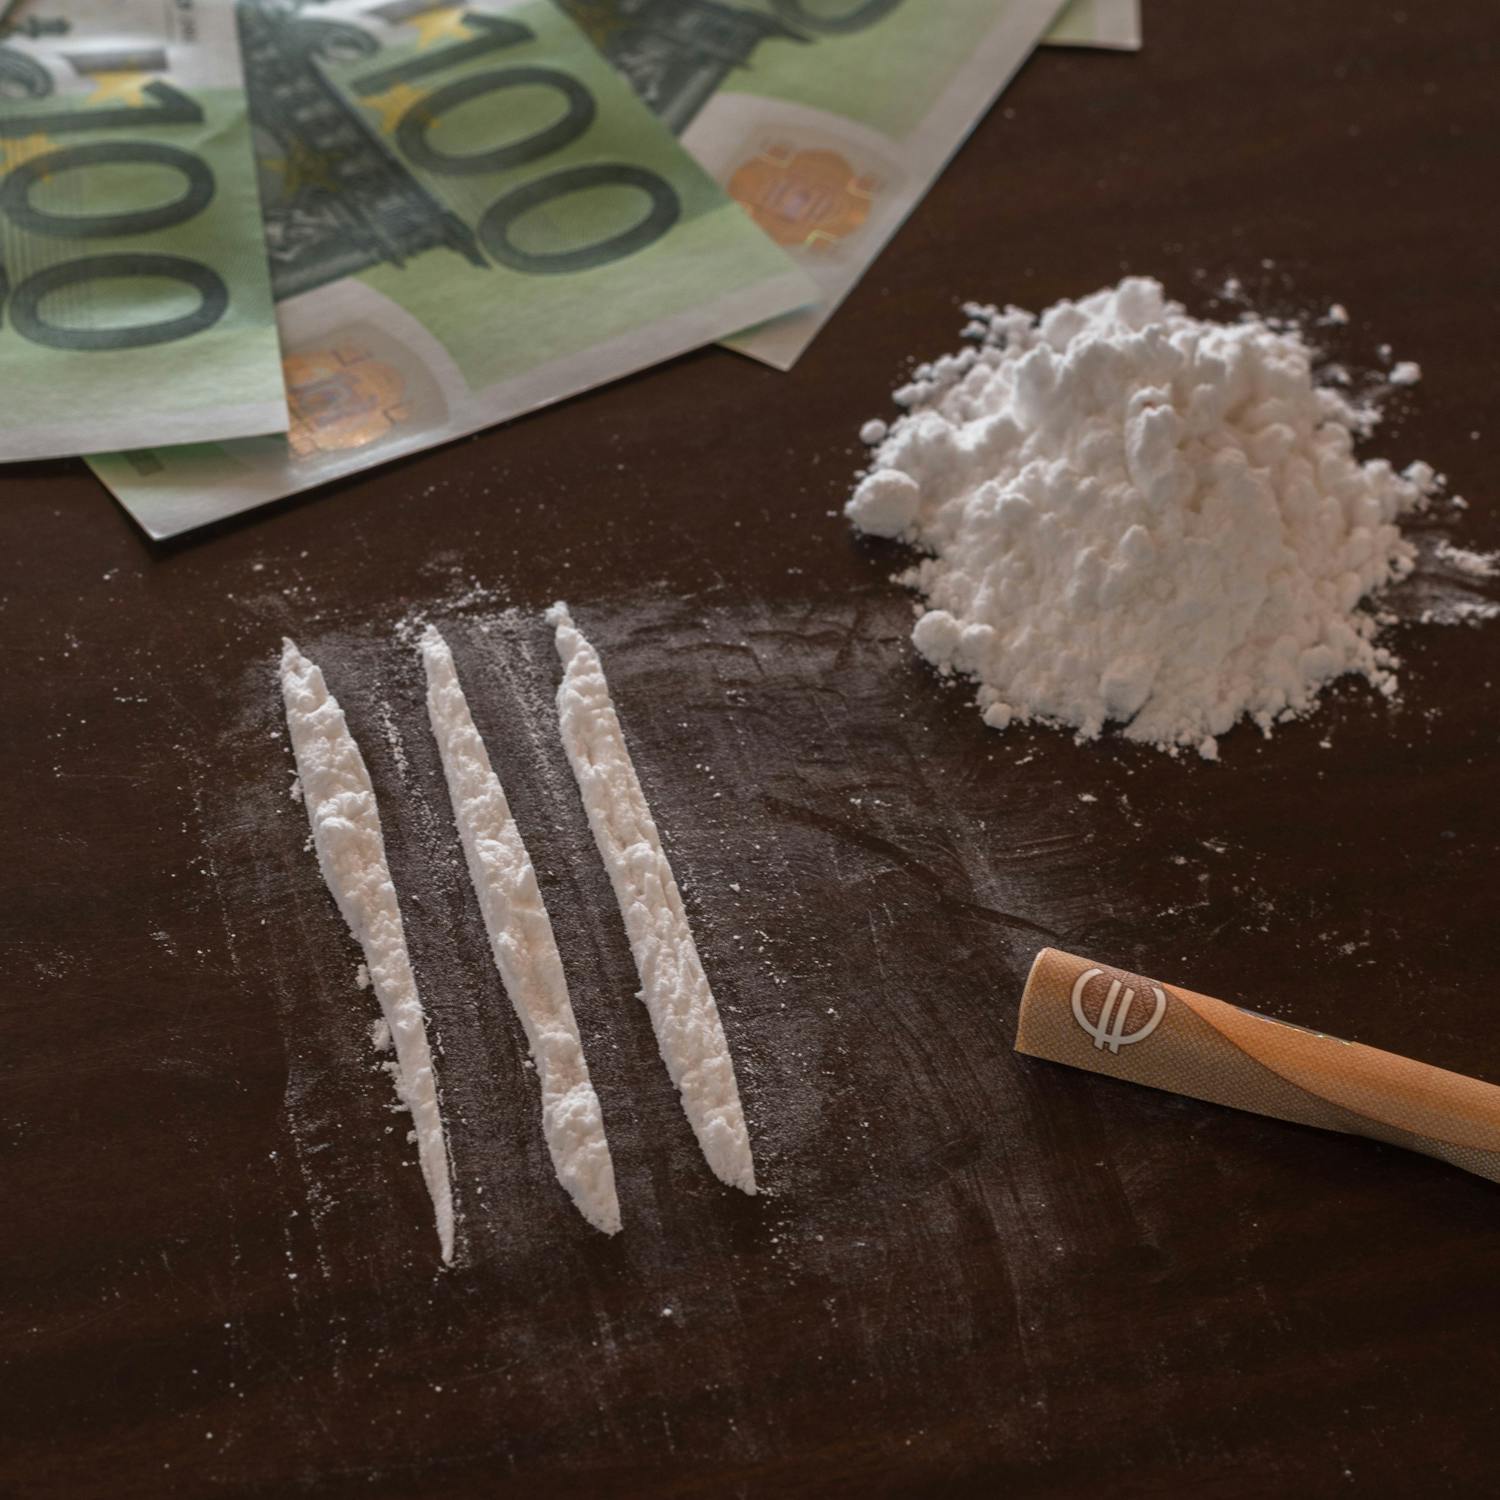 Woman Reveals Shocking Details of Partners Cocaine Habit Live on Air